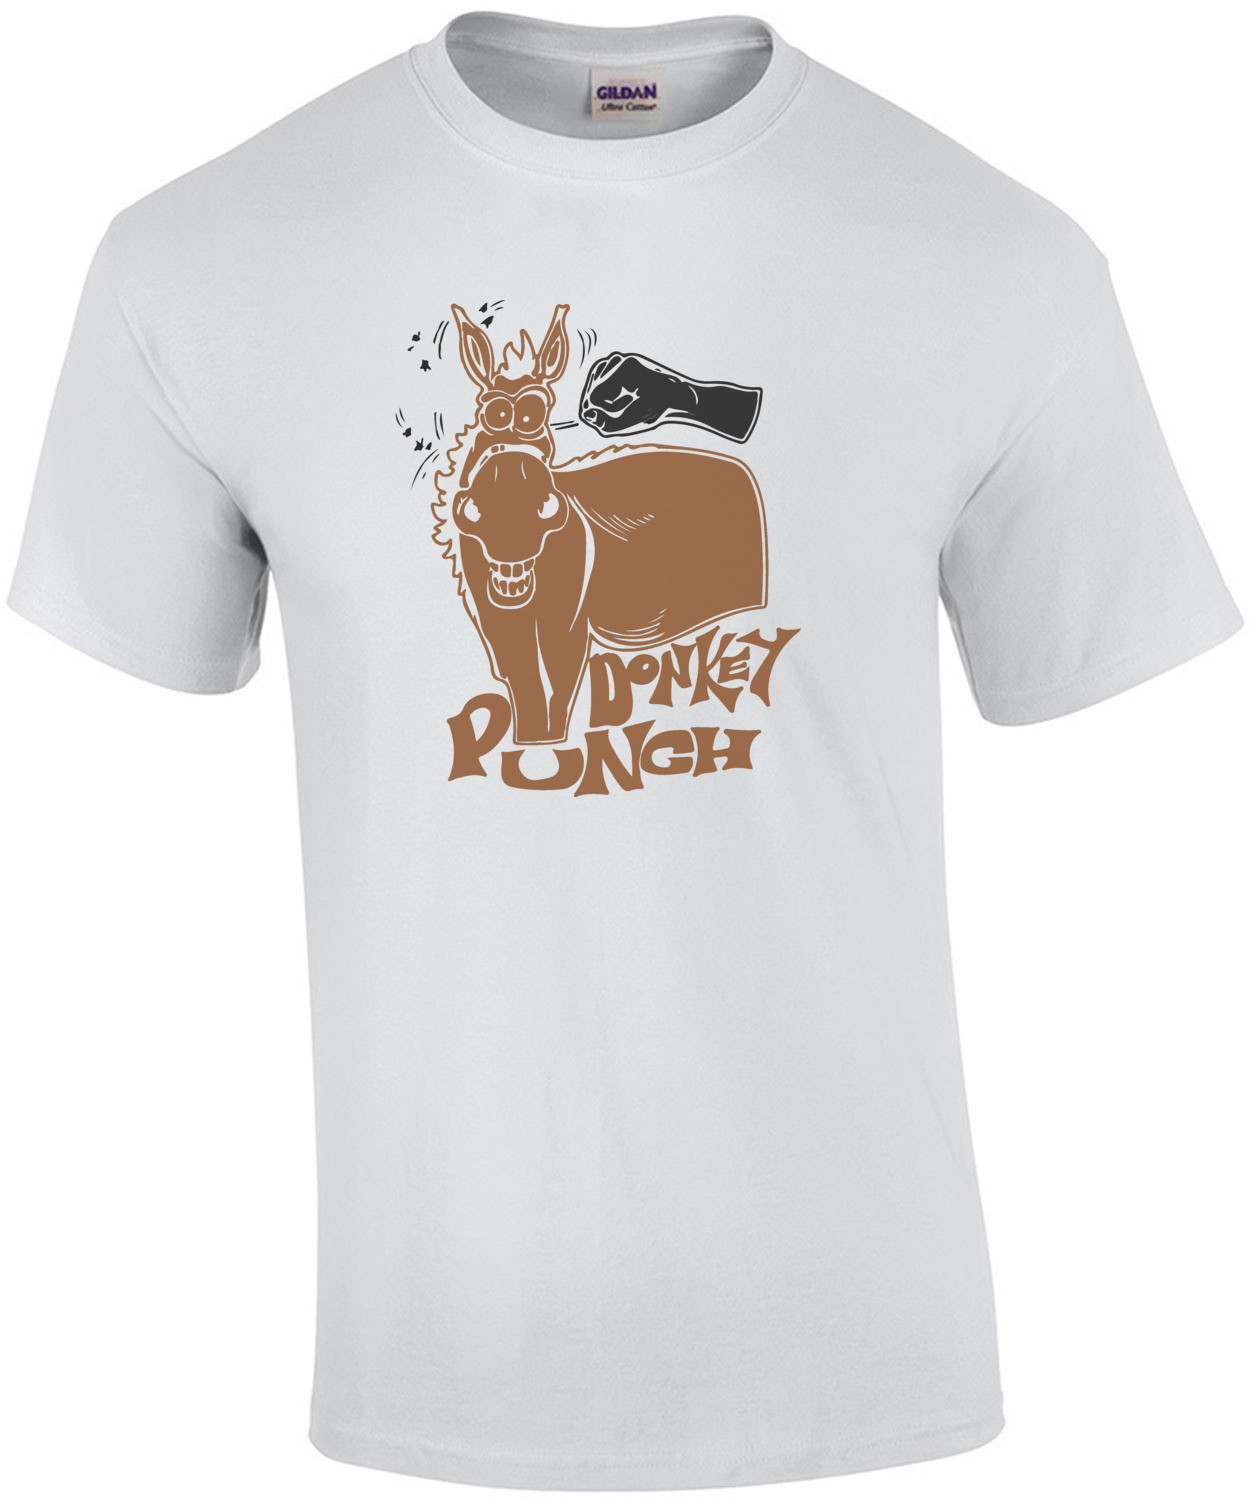 Donkey Punch T-Shirt